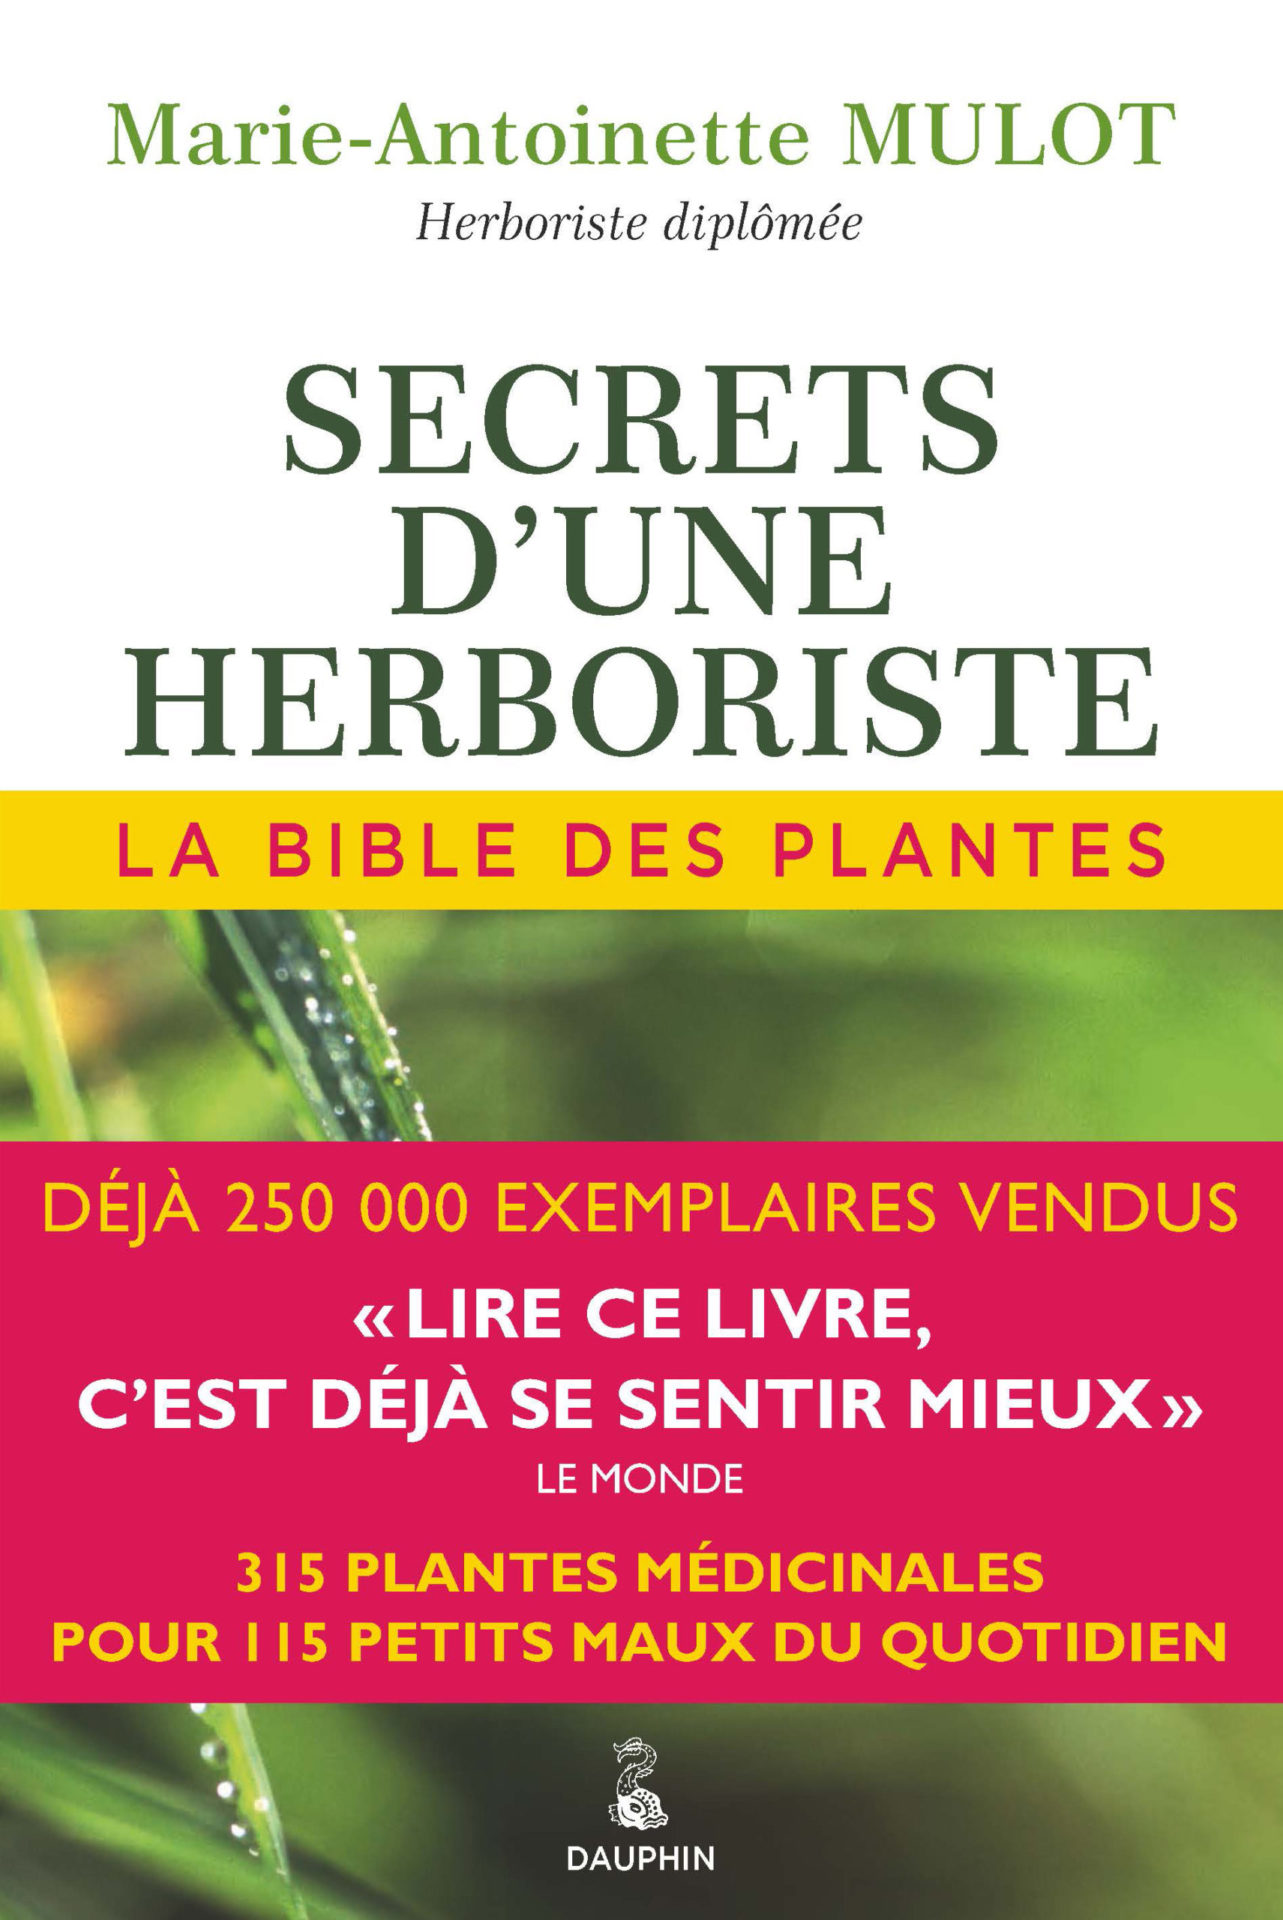 herboriste_secrets